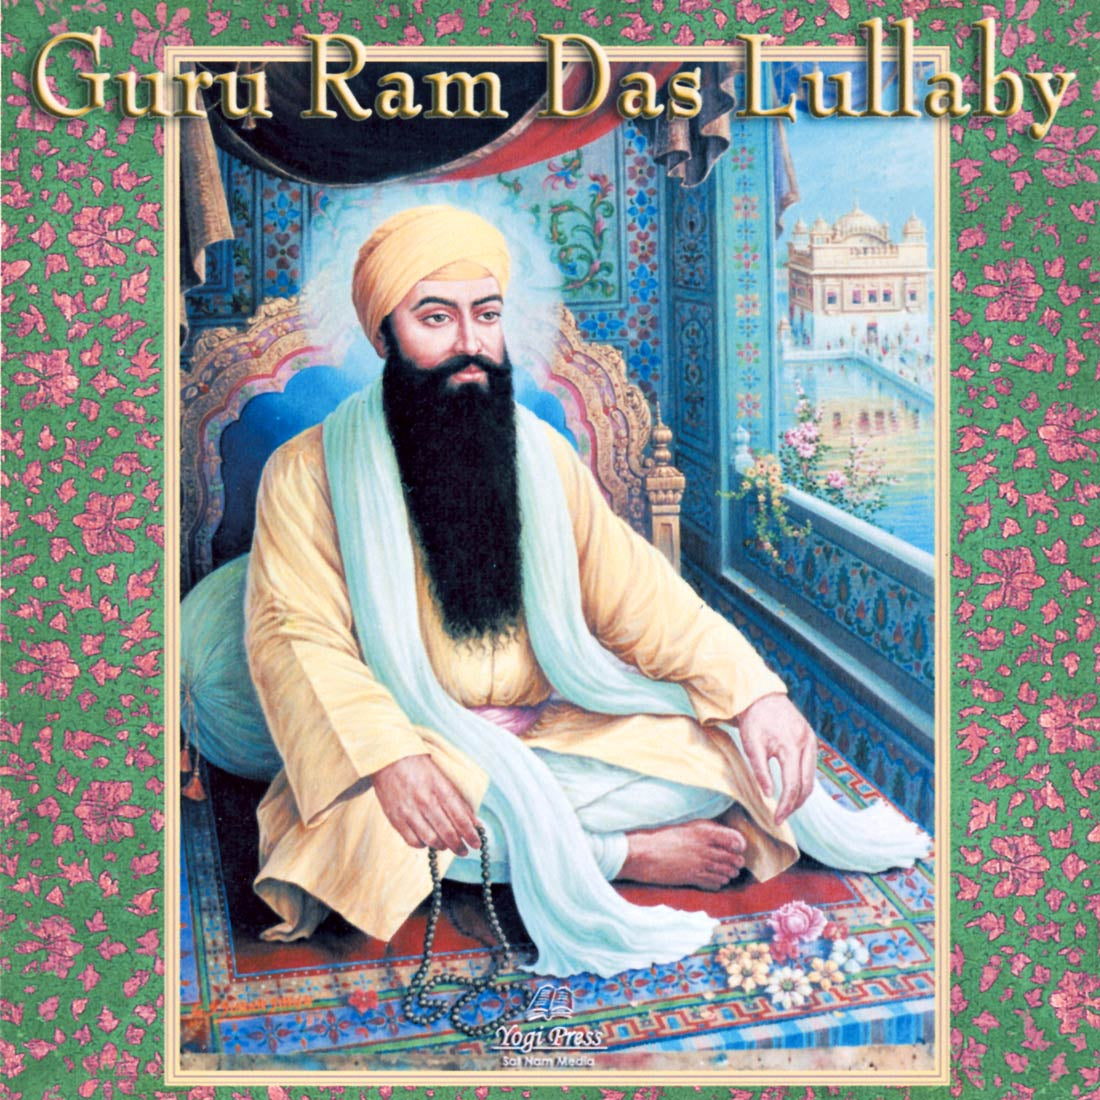 Guru Ram Das Lullaby - Femmes Khalsa, Mata Mandir et Gurudass Kaur